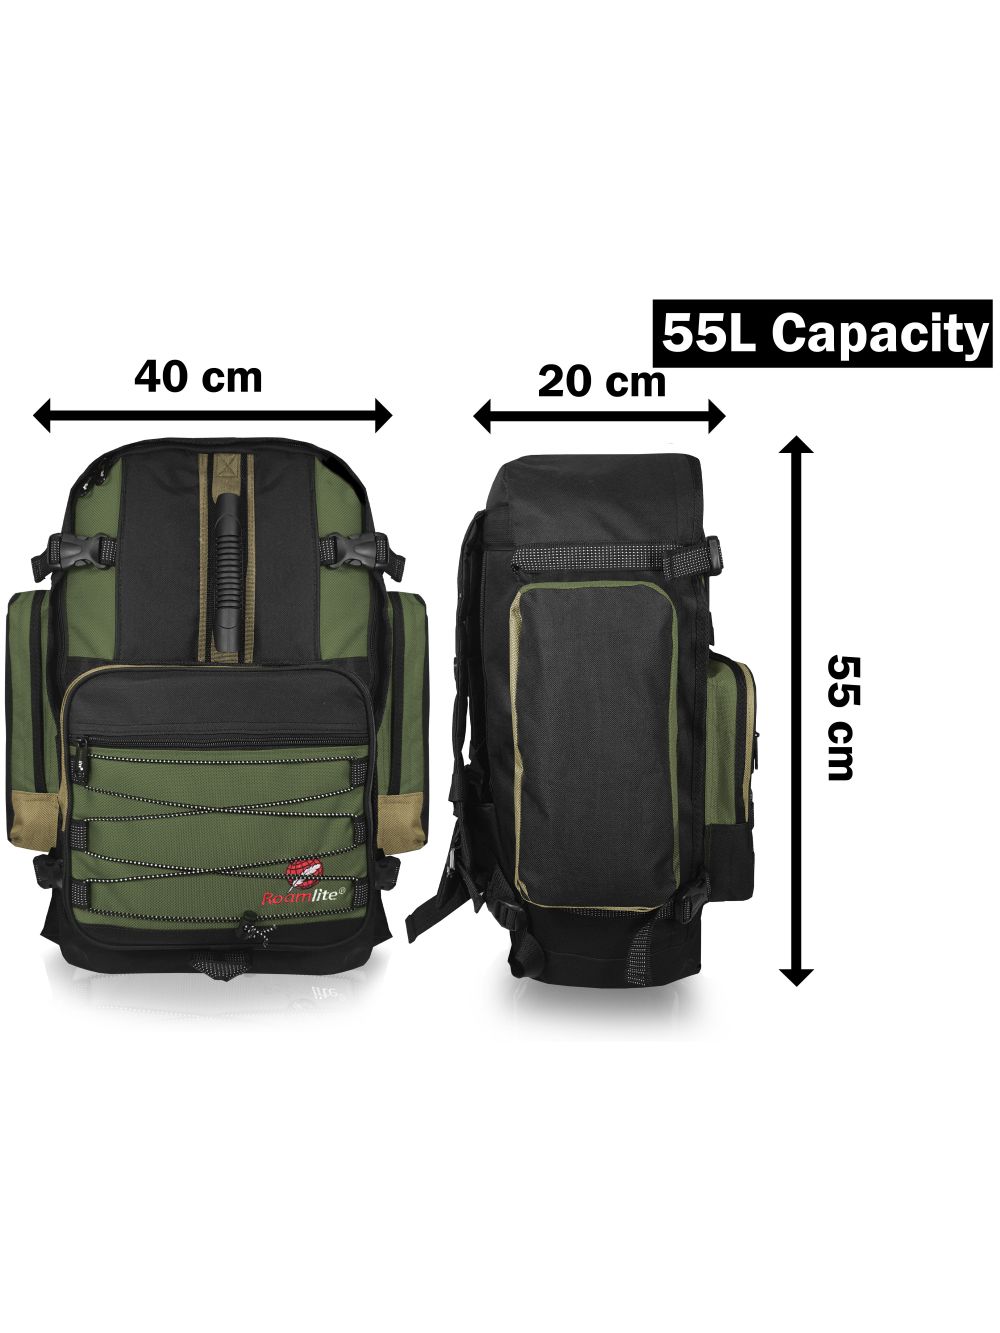 Roamlite Camping Backpack Green Polyester RL55 measurements